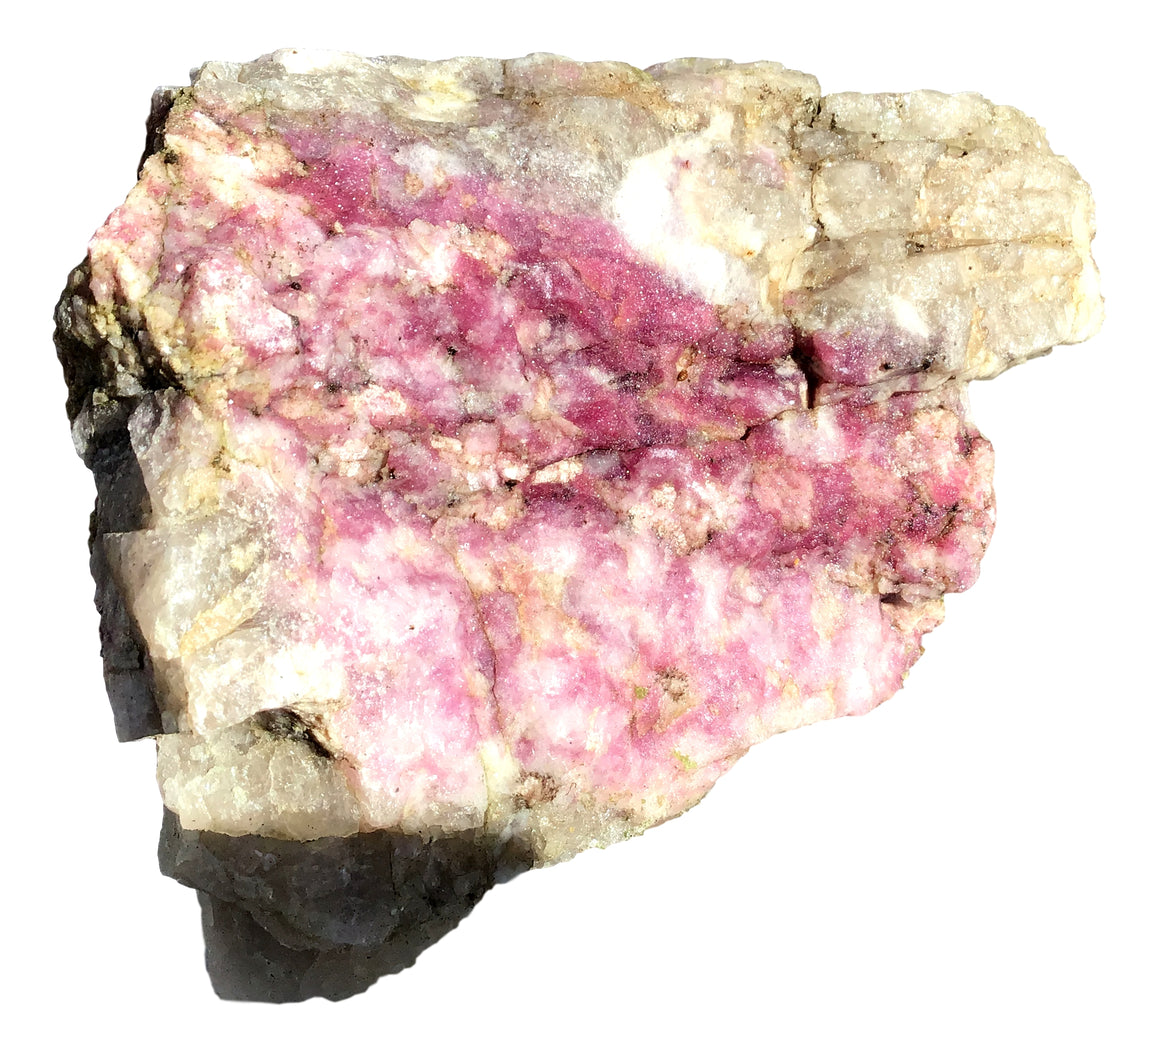 Watermelon Tourmaline Crystal Mineral Display Specimen #14 - 8"x6"x5" - dinosaursrocksuperstore